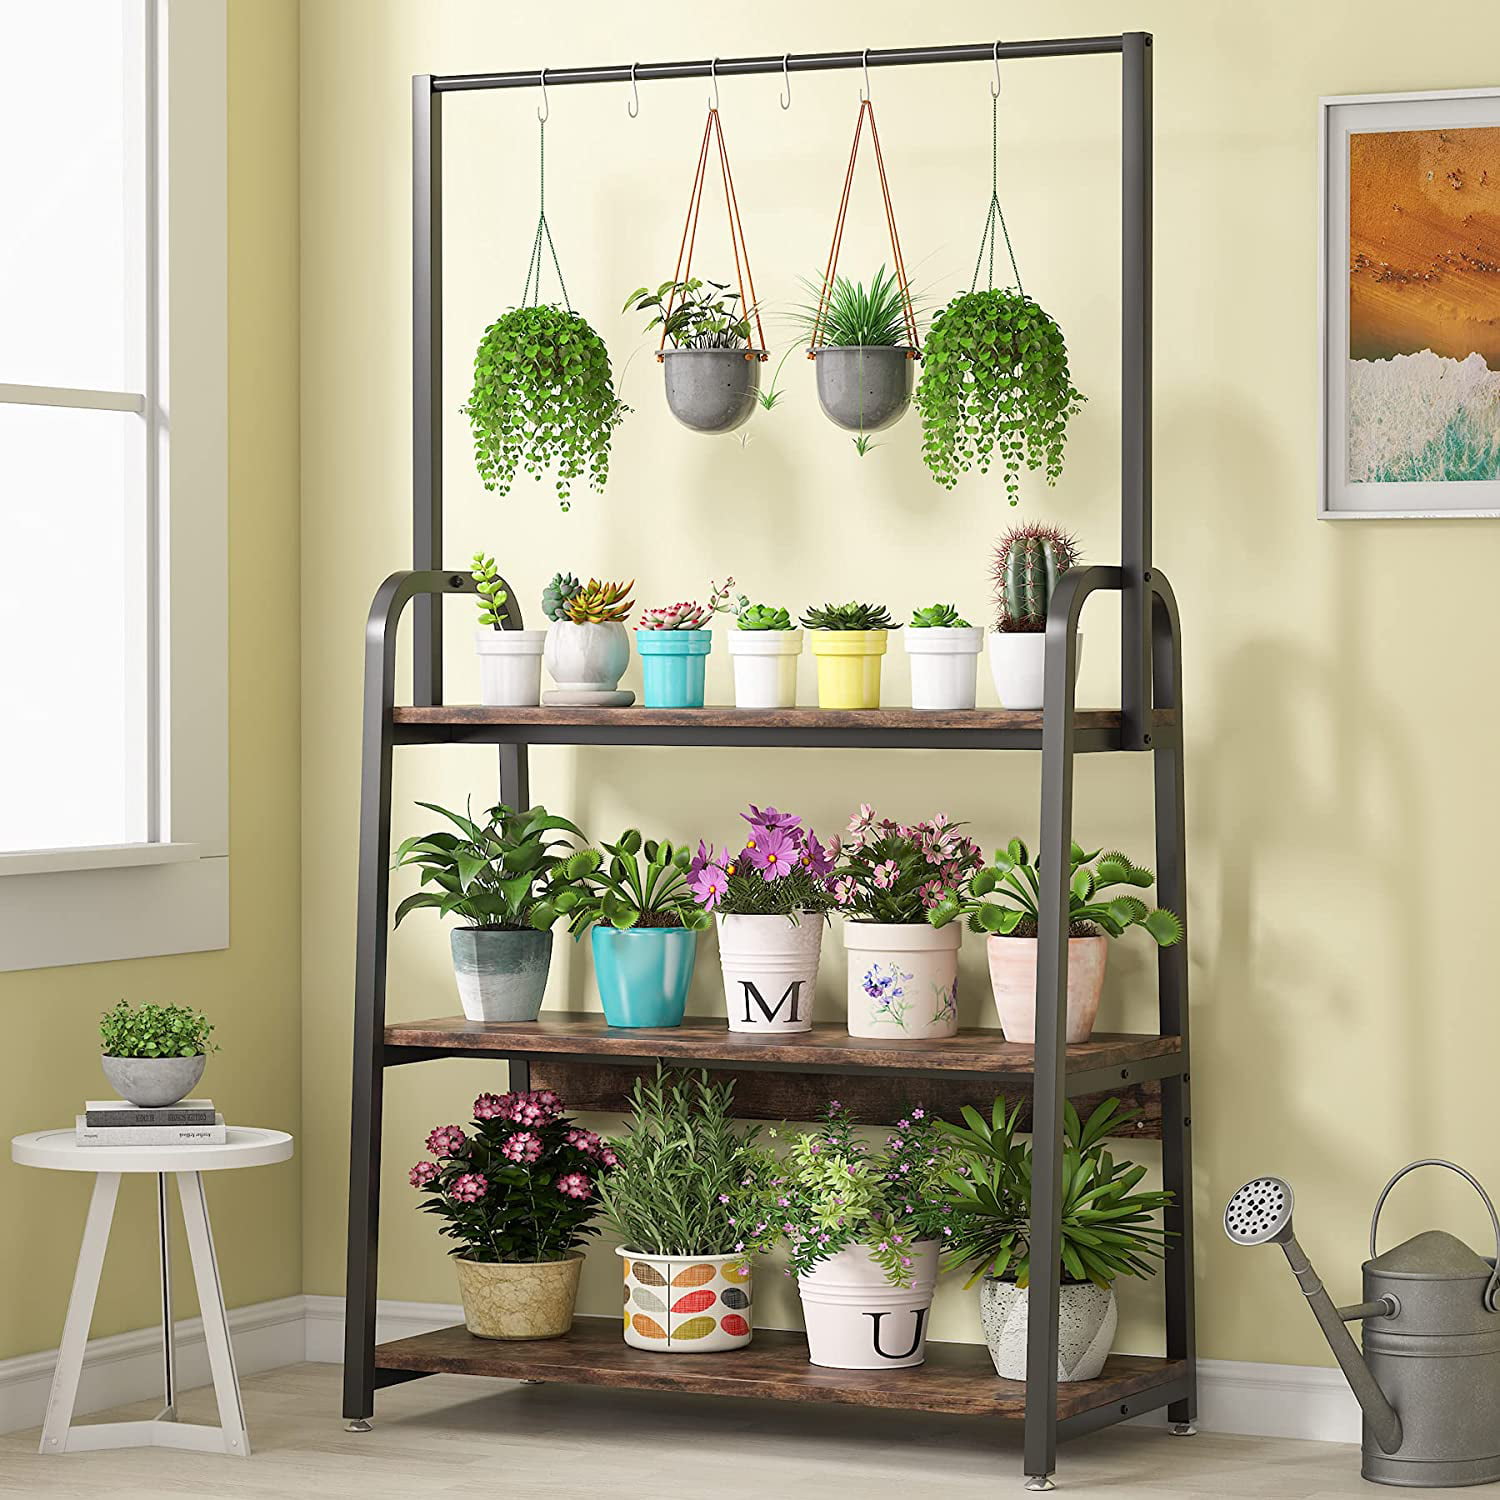 3 Tier Flower Stand Hanging Plant Display Basket Holder Decor Pot Garden Outdoor 